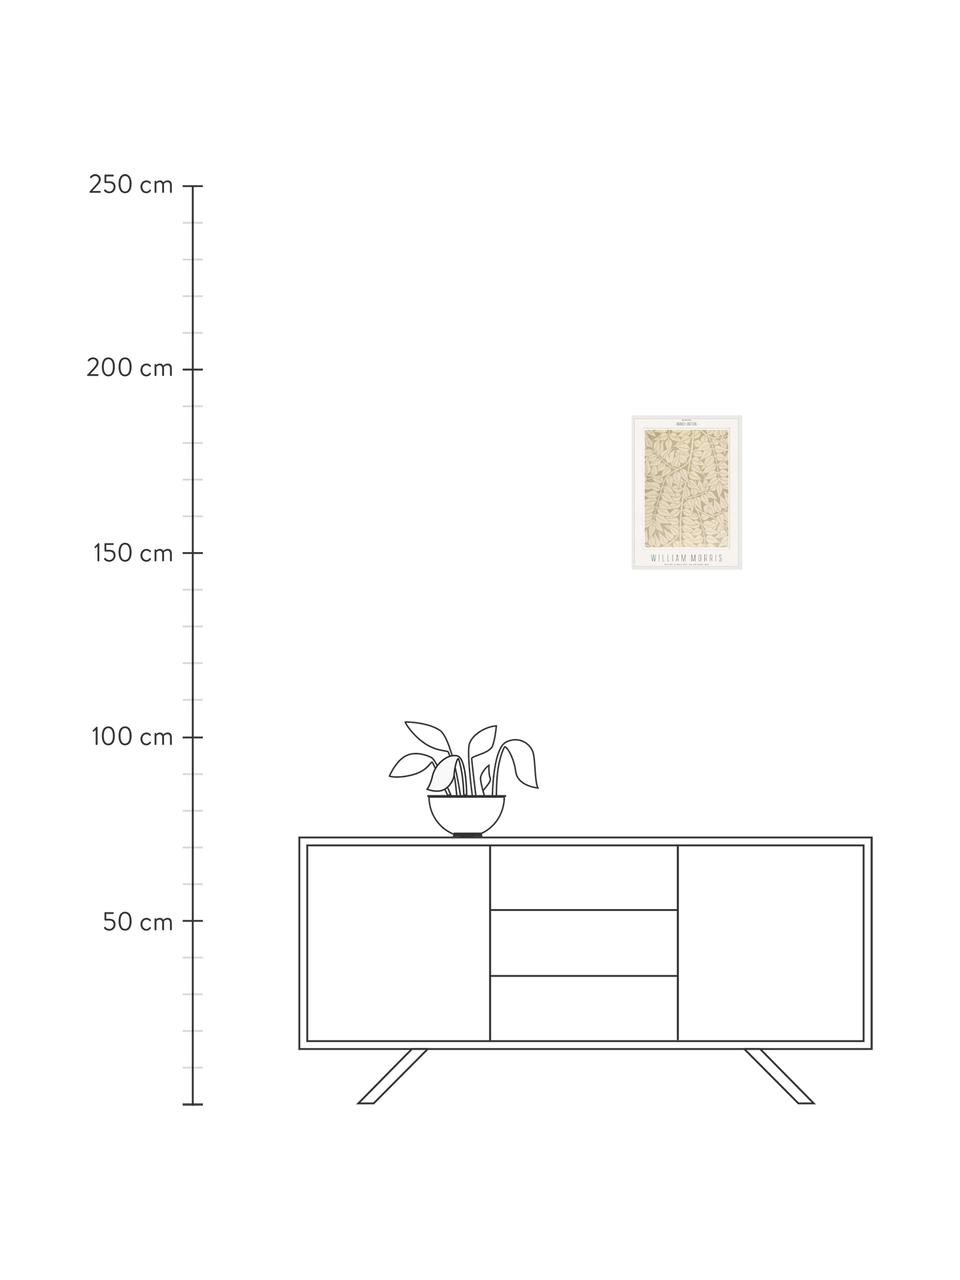 Impresión digital enmarcada Branch - William Morris, Beige, An 32 x Al 42 cm